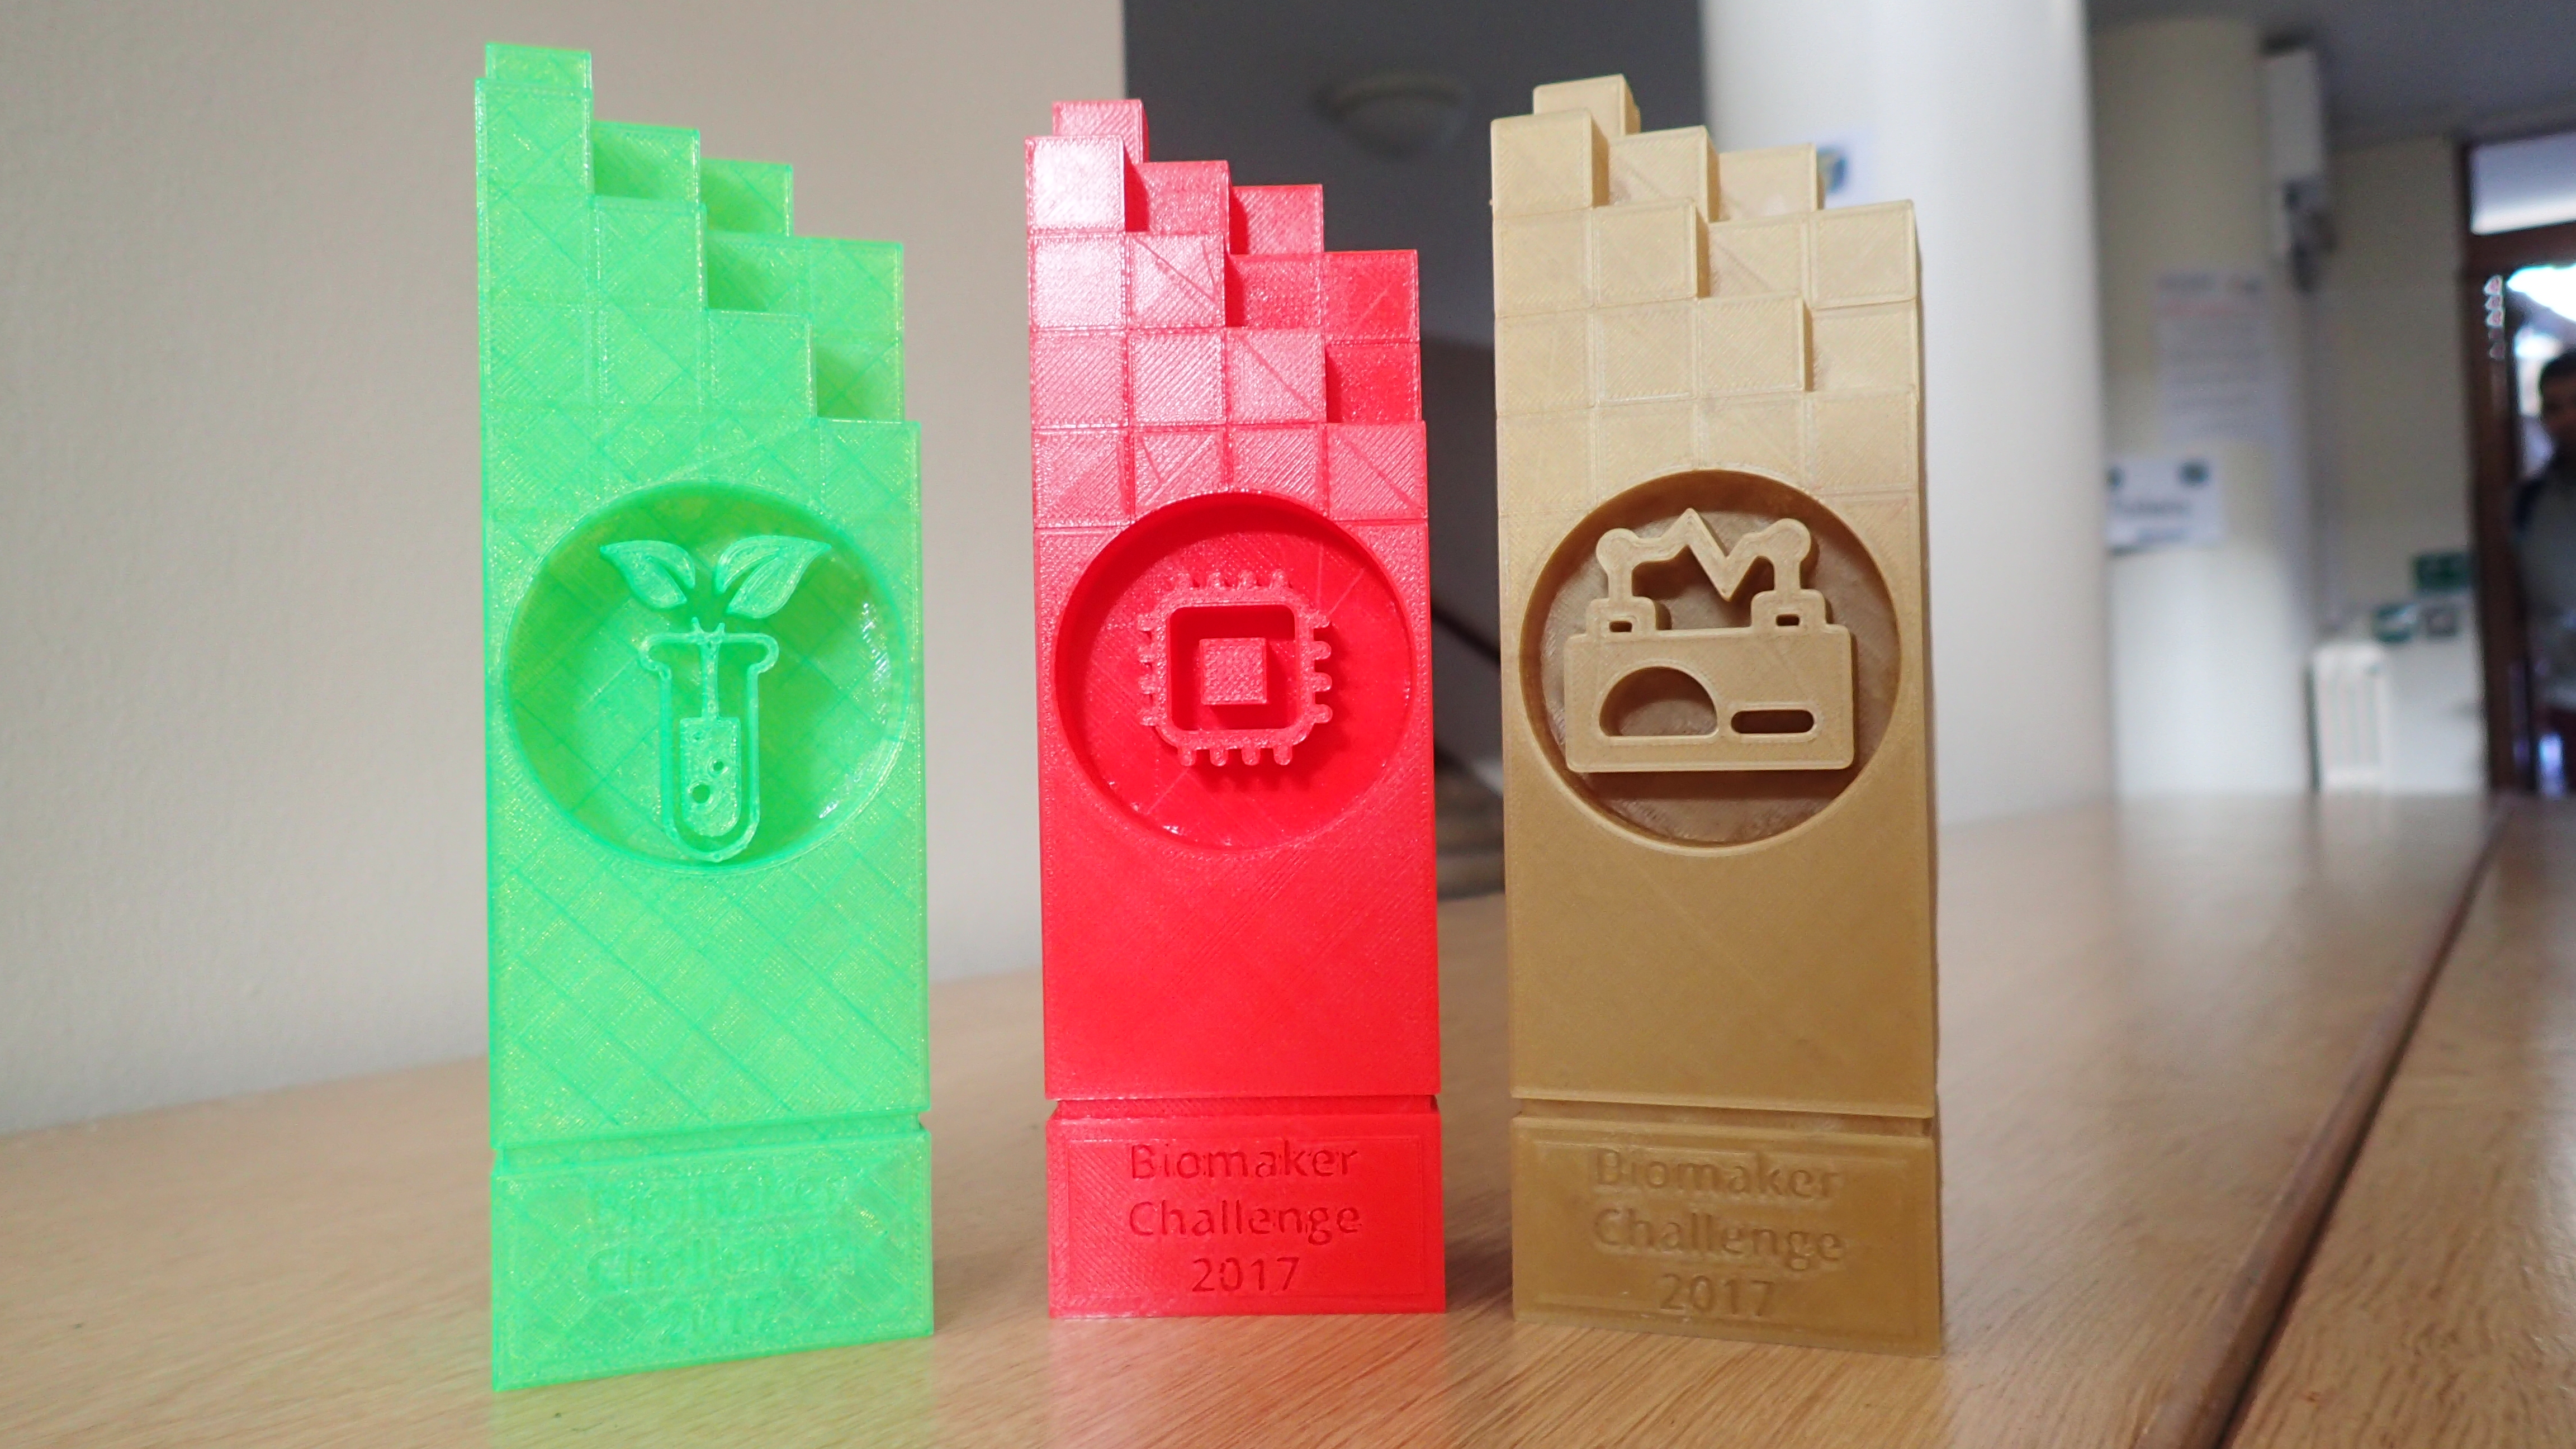 The 3D-printed Biomaker Challenge Awards